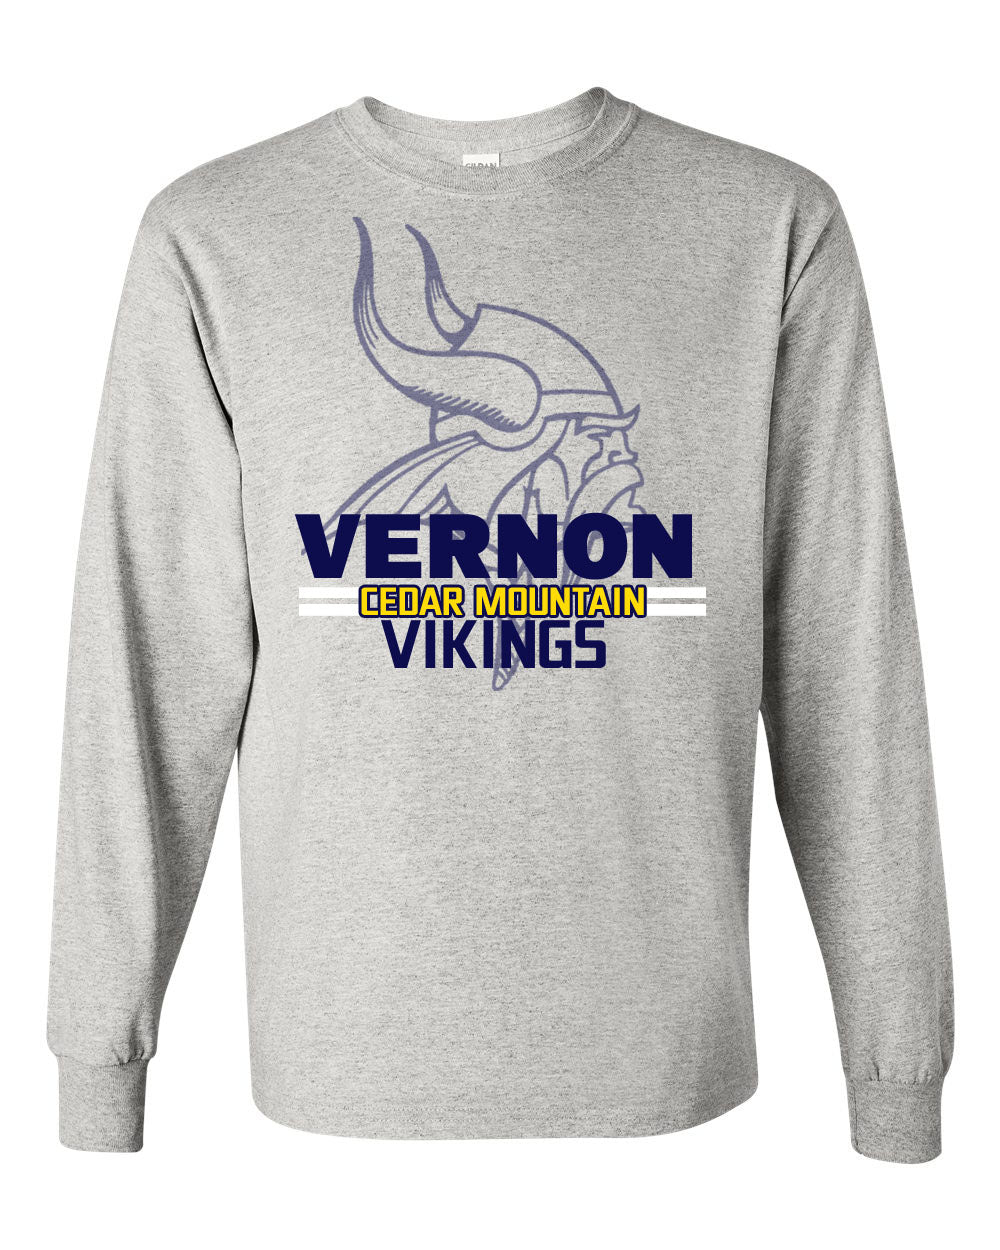 Vernon Design 9 Long Sleeve Shirt